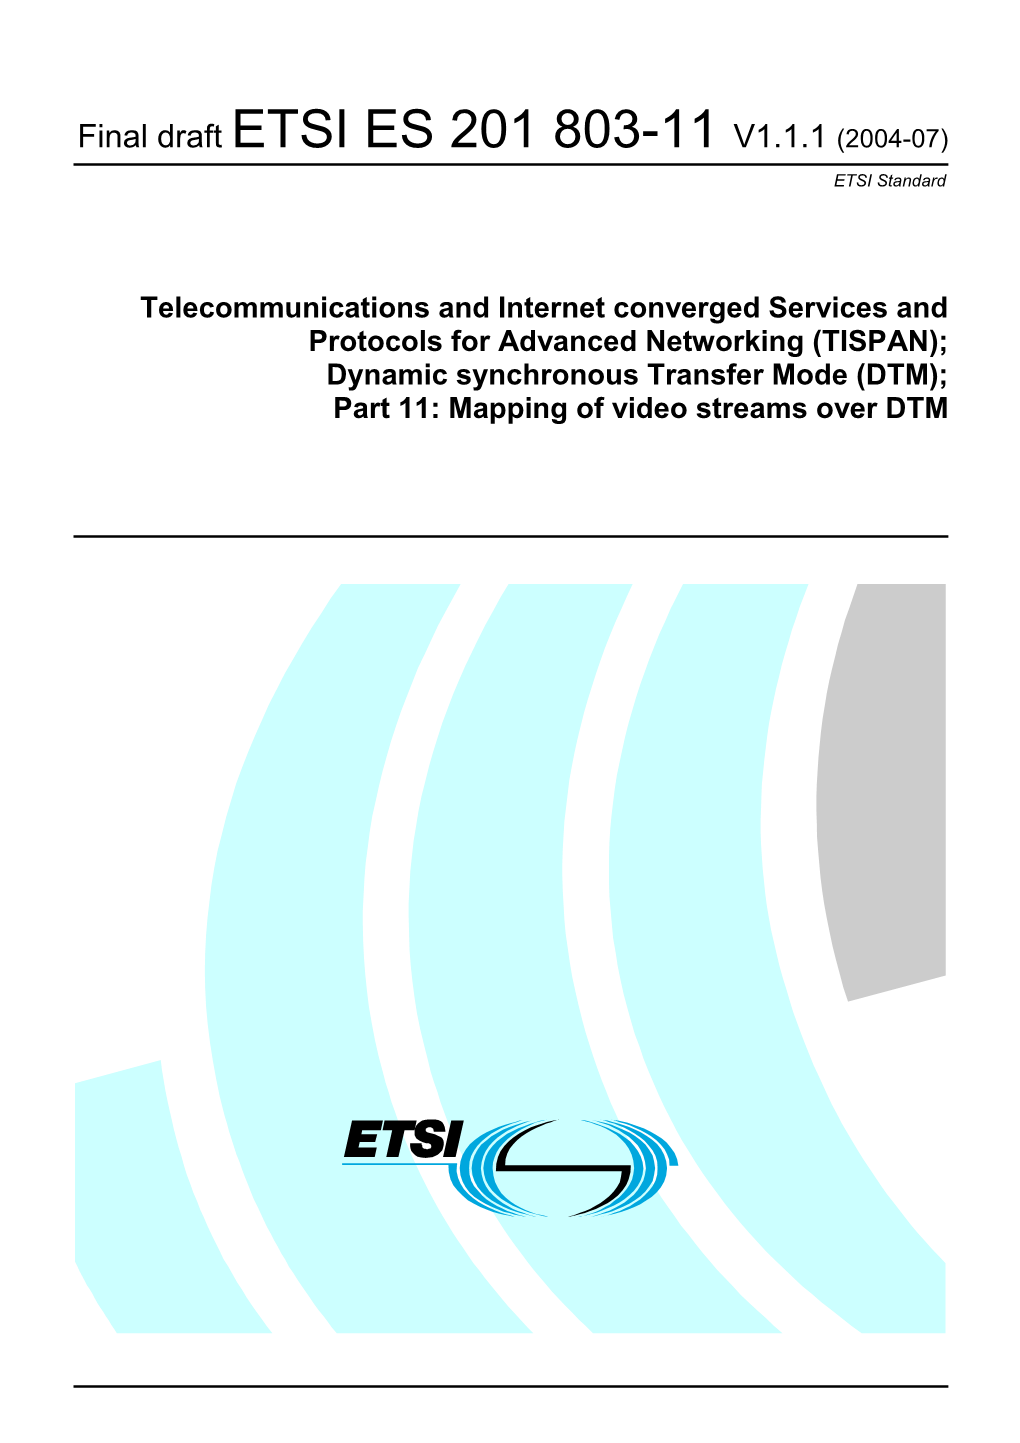 Final Draft ETSI ES 201 803-11 V1.1.1 (2004-07) ETSI Standard